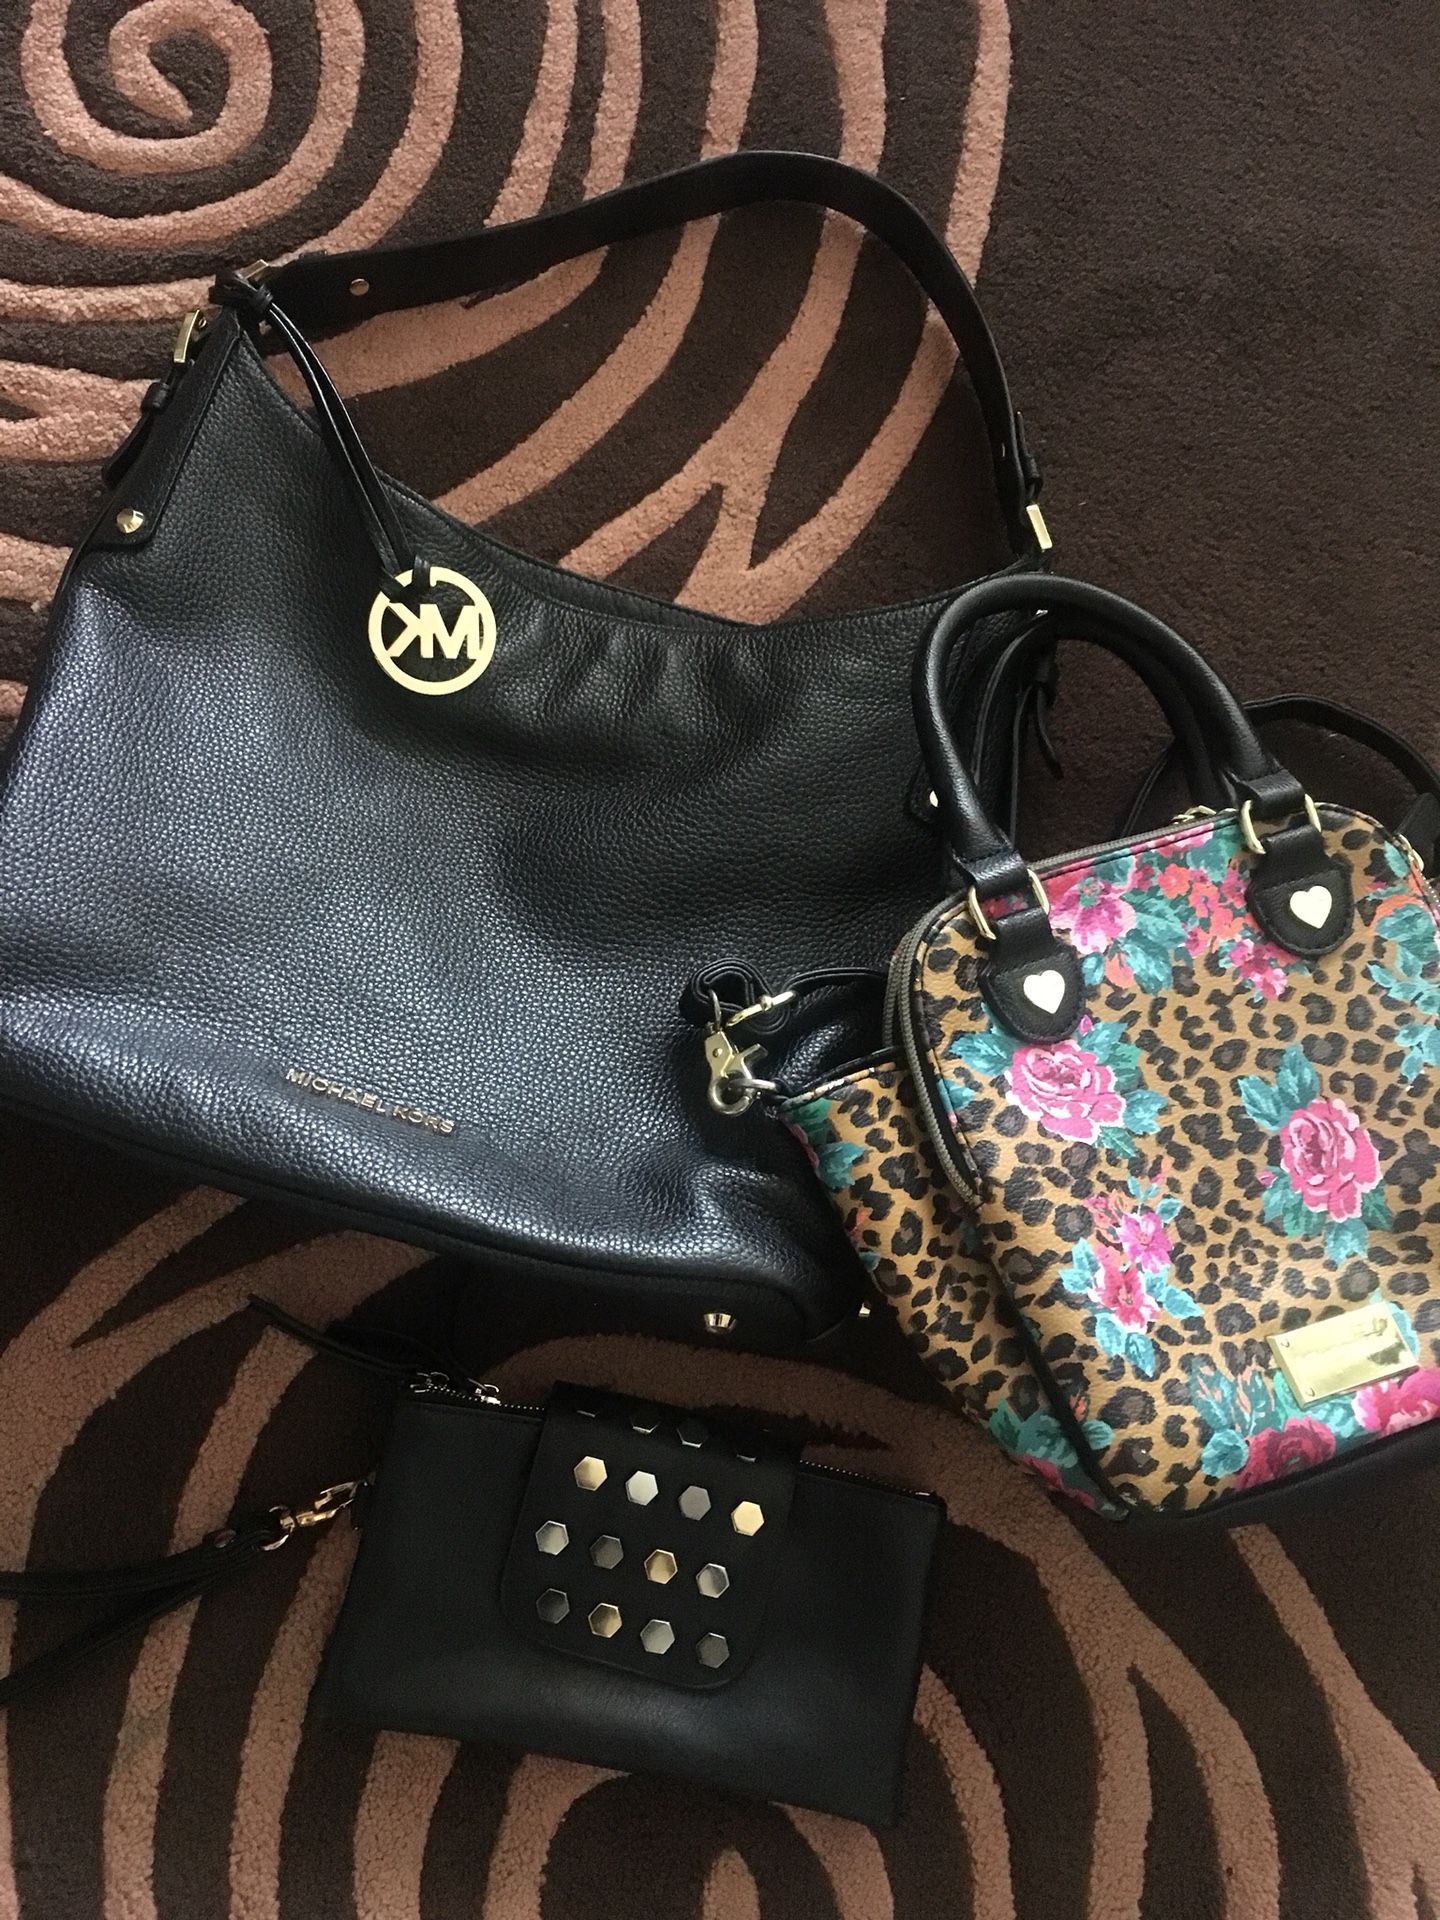 Purses bags Micheal Kors Black purse like New! Betsy Johnson purse